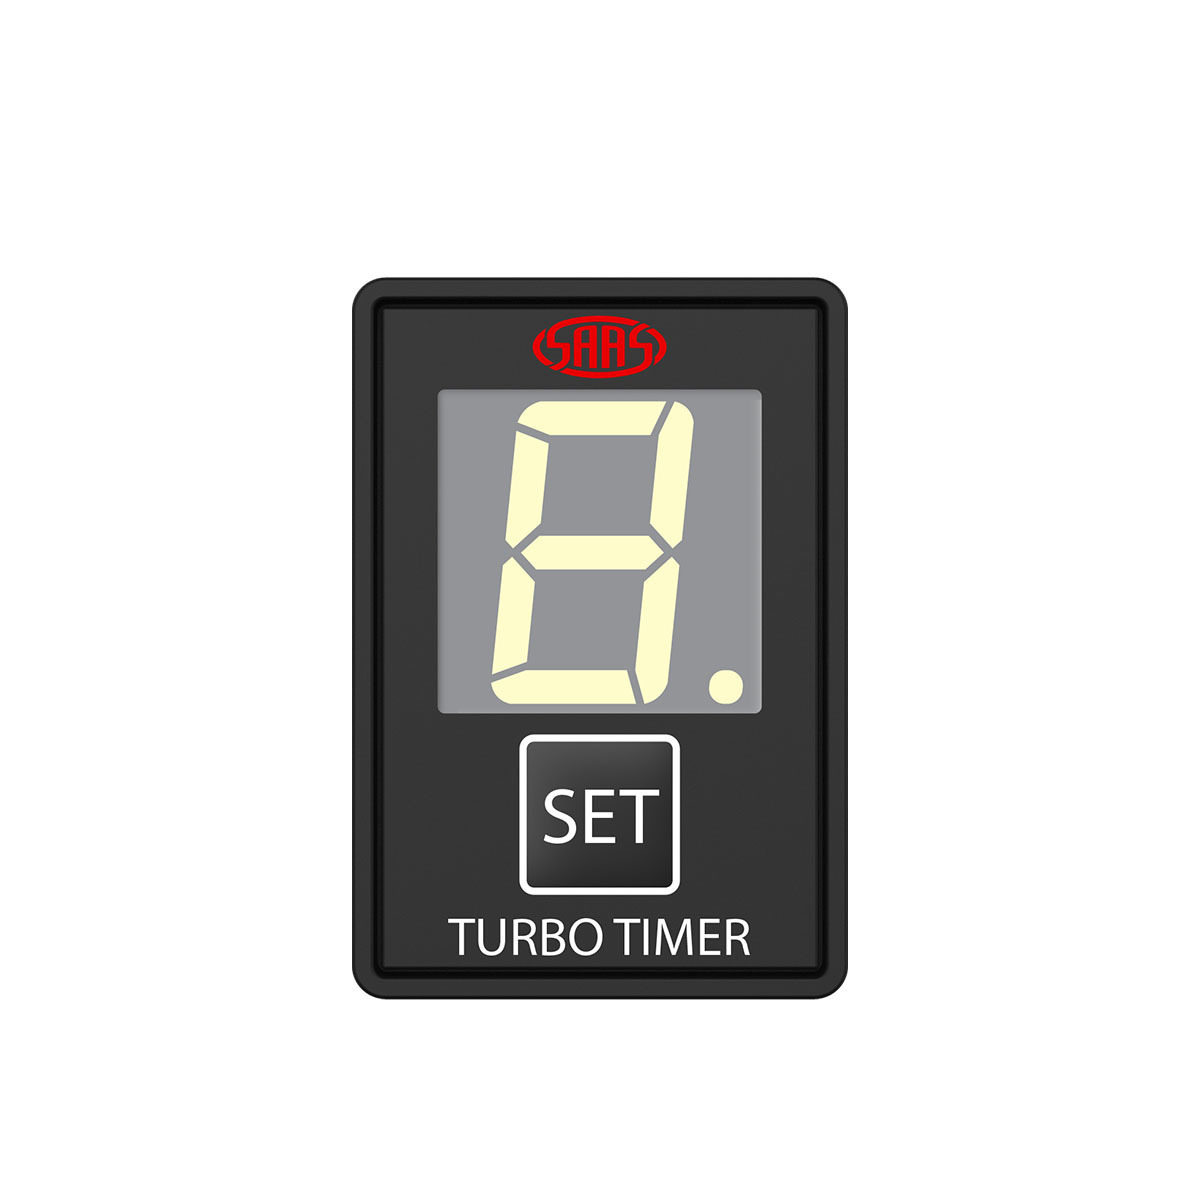 Turbo Timer Digital Switch 9 min Toyota Mount 27.55mm x 13mm